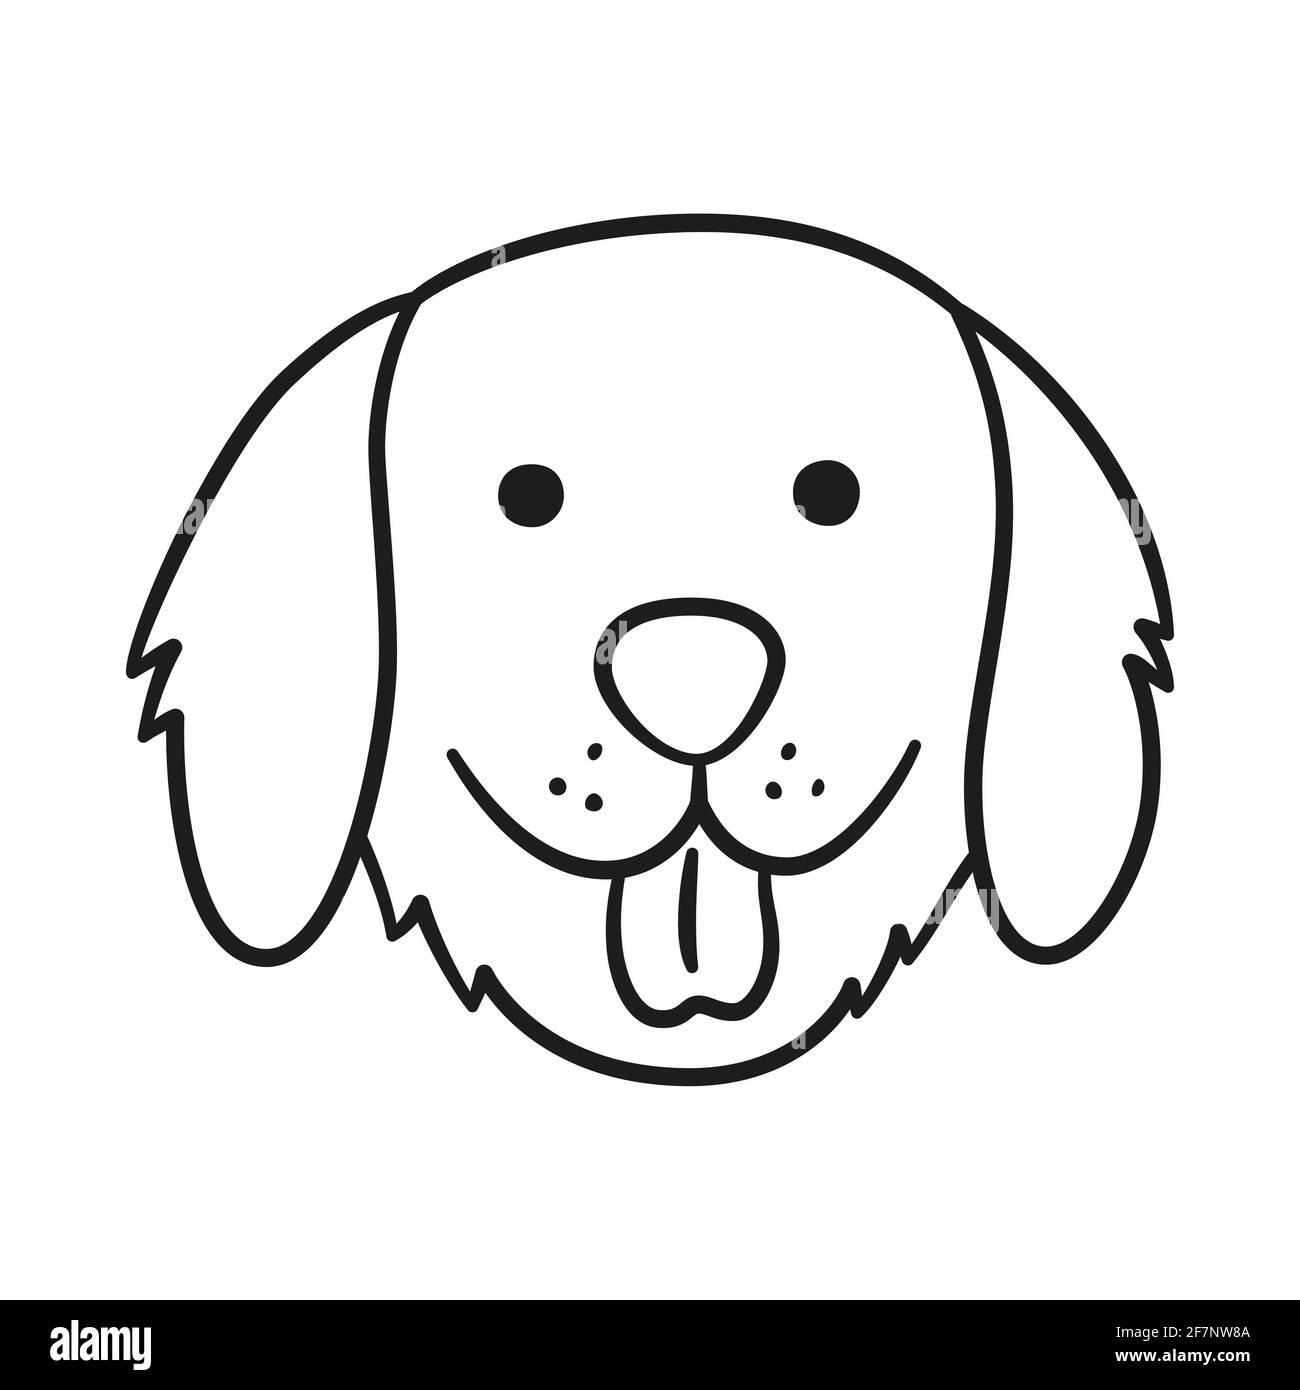 Cute retrieverface. Dog head icon. Hand drawn isolated vector ...